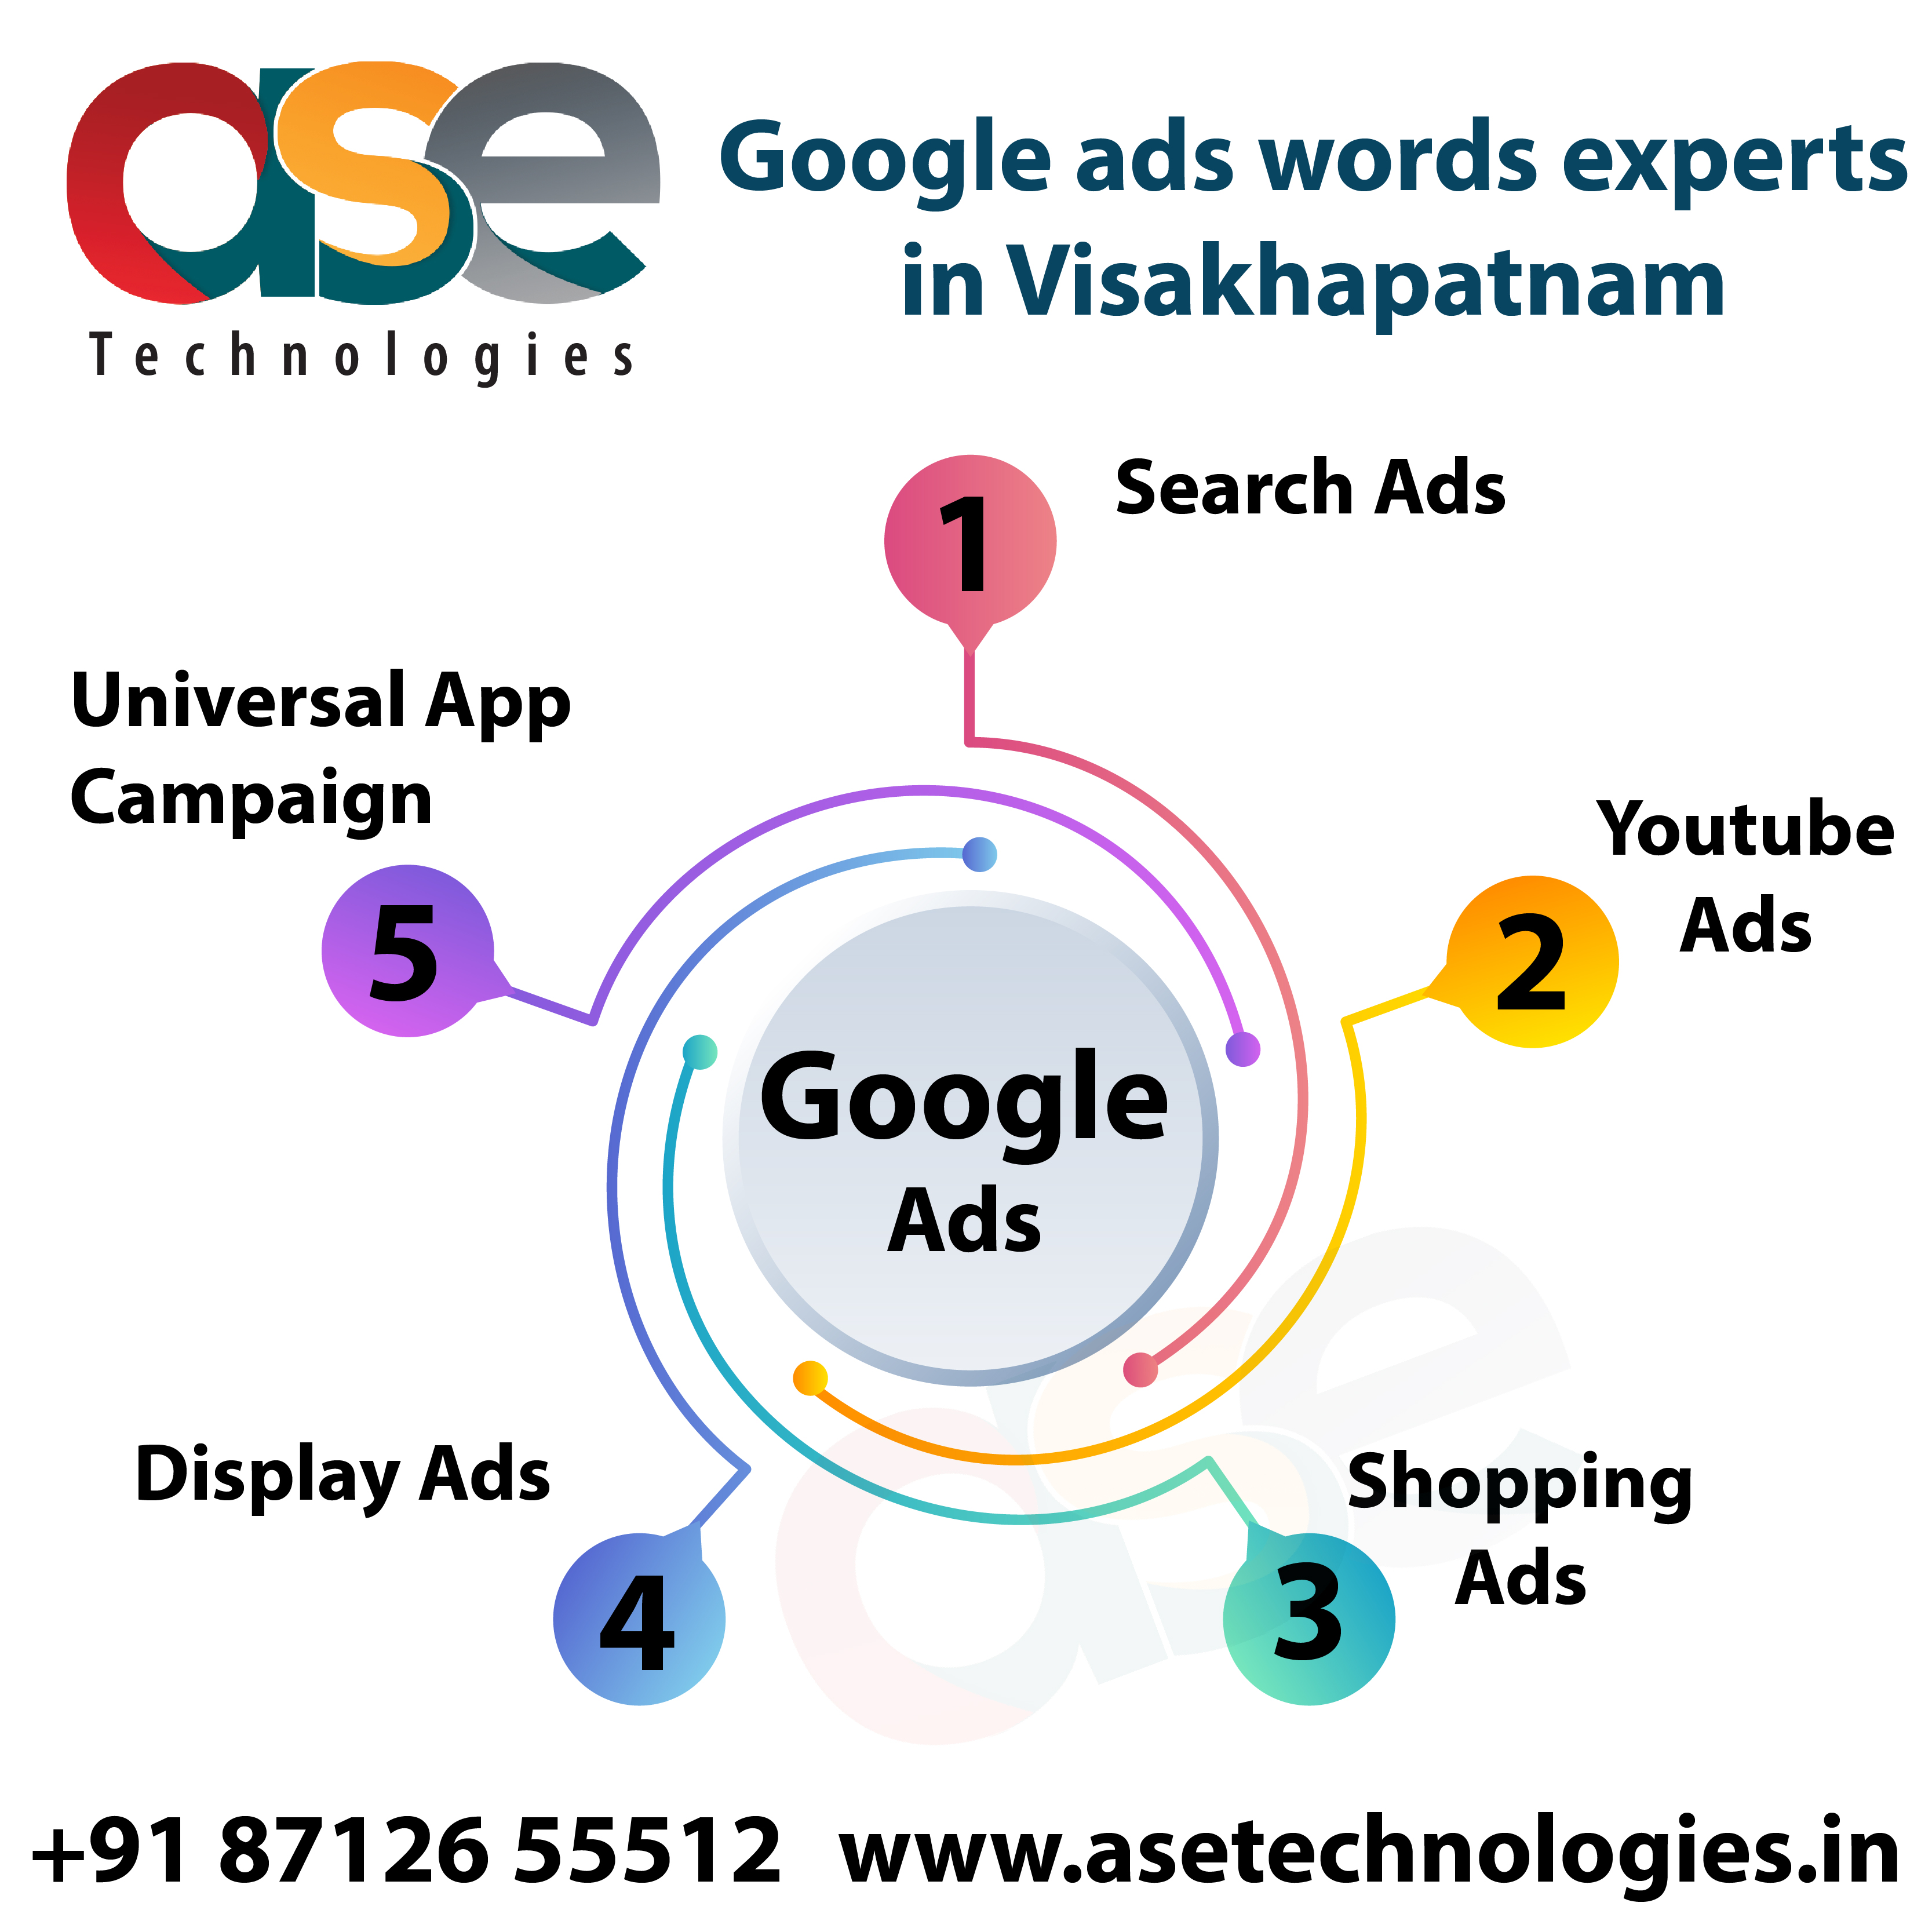 Google Adwords experts in Visakhapatnam